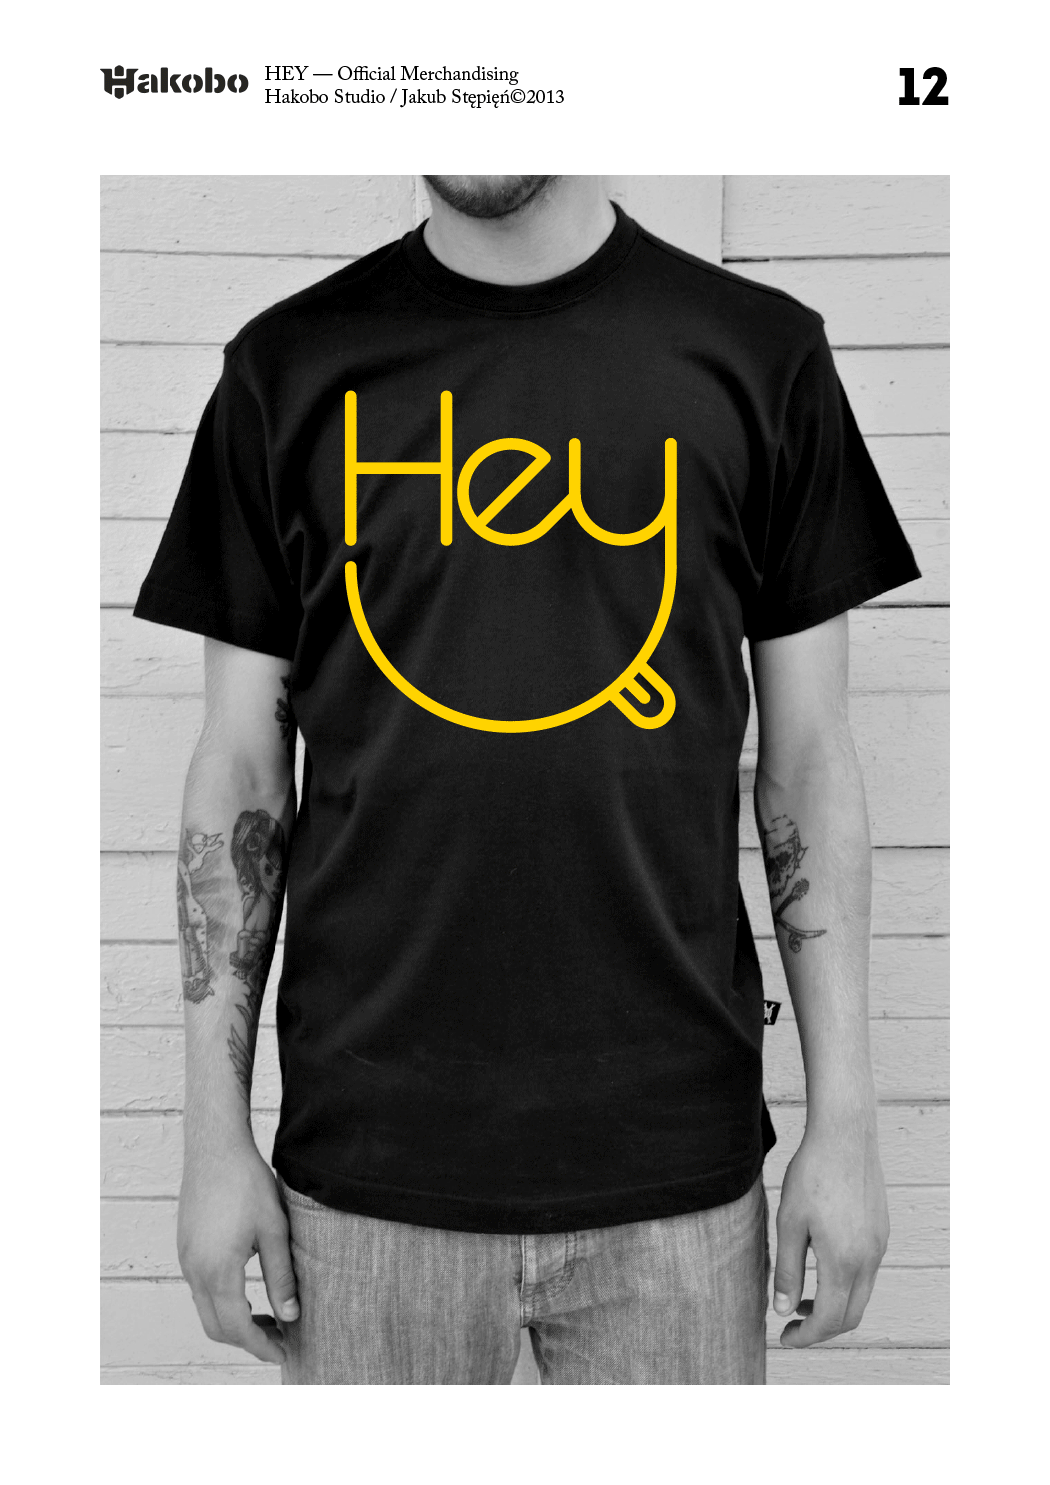 hey-band-merch-hakobo-jakub-stepien-prints-t-shirt-12